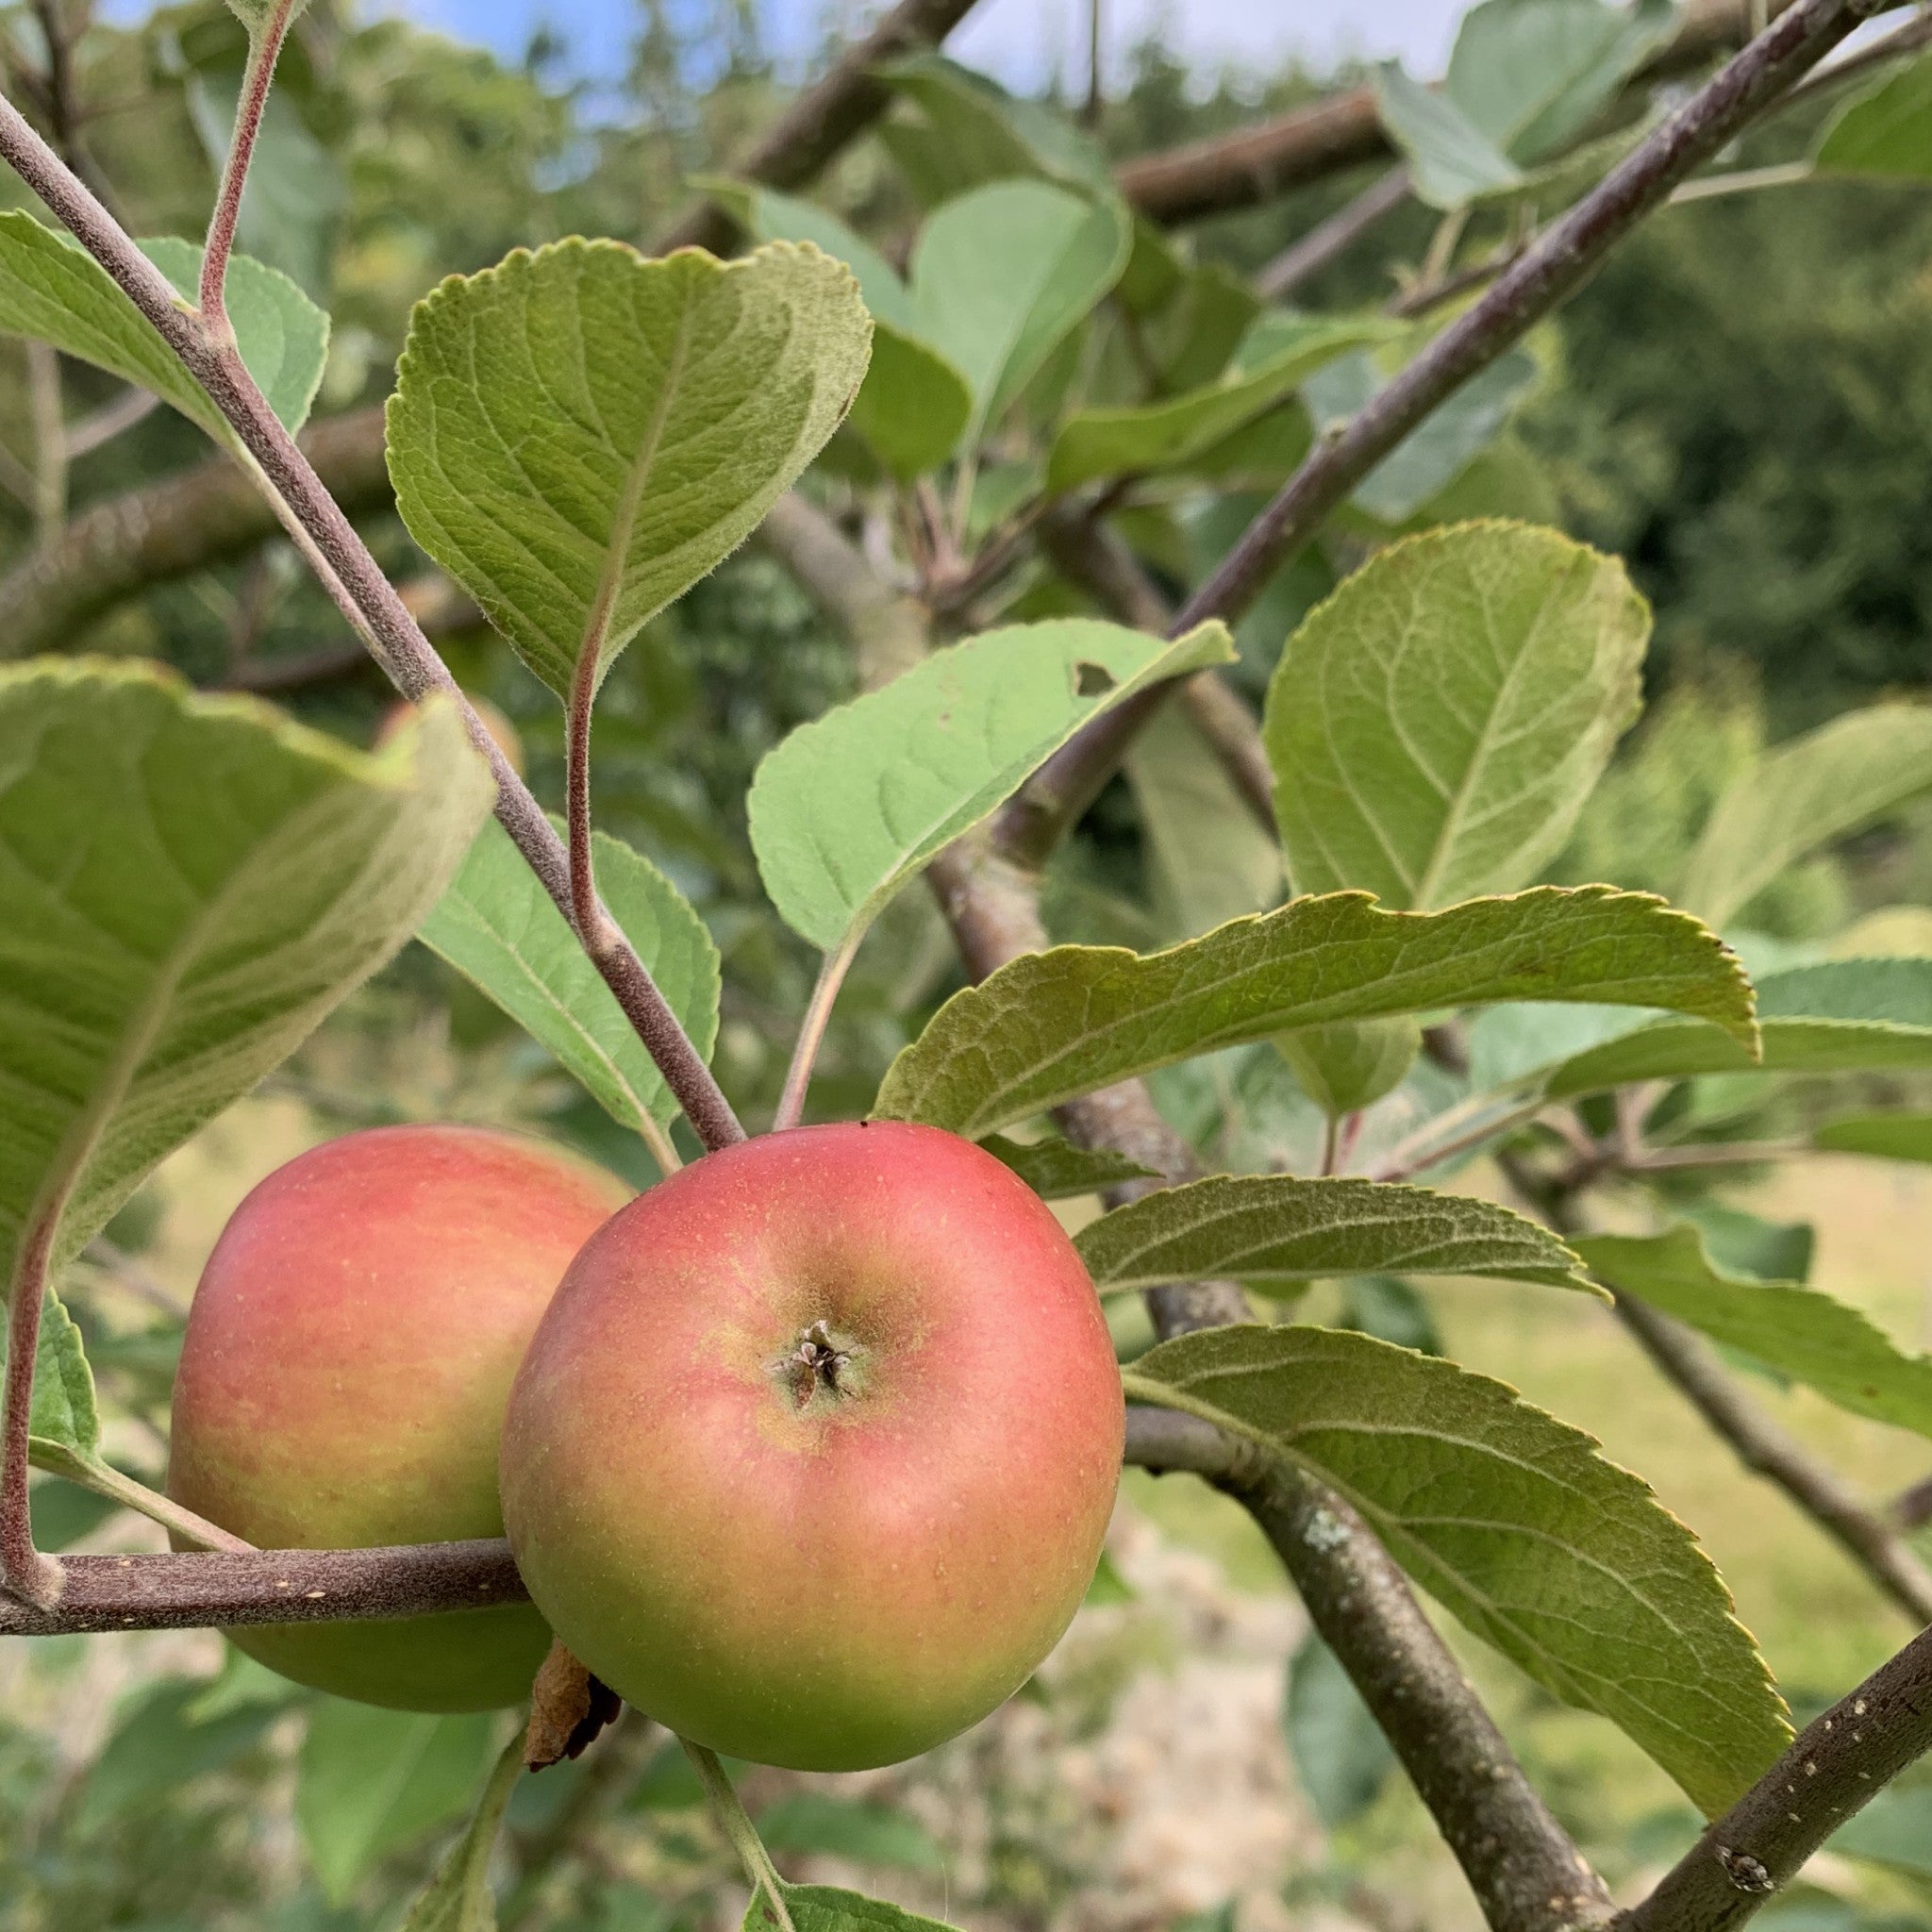 Hangdown apple tree